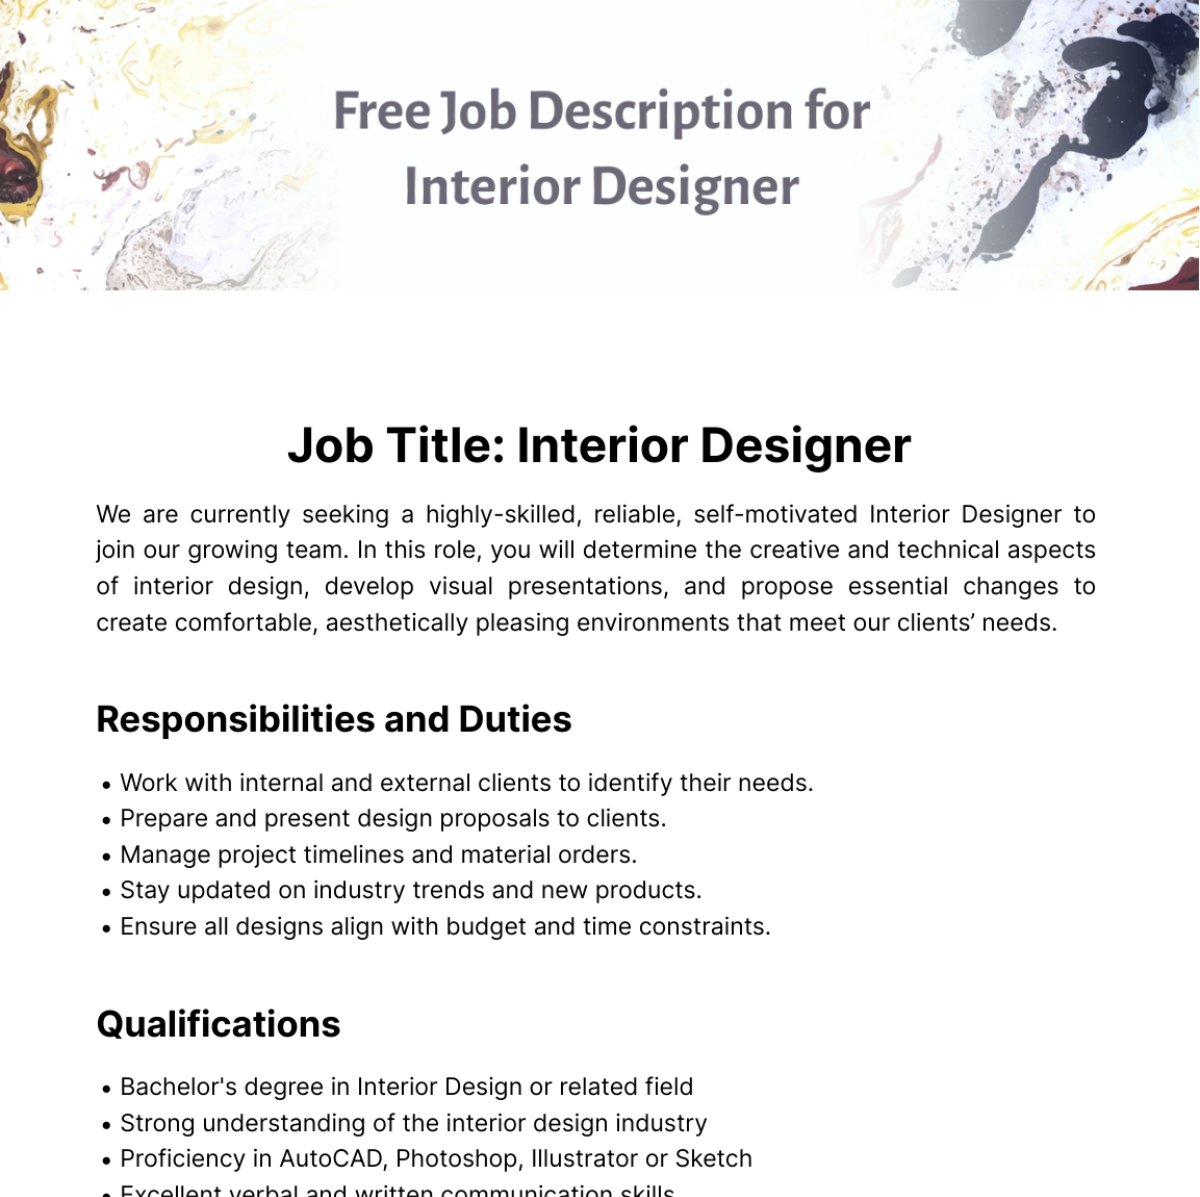 Job Description for Interior Designer Template